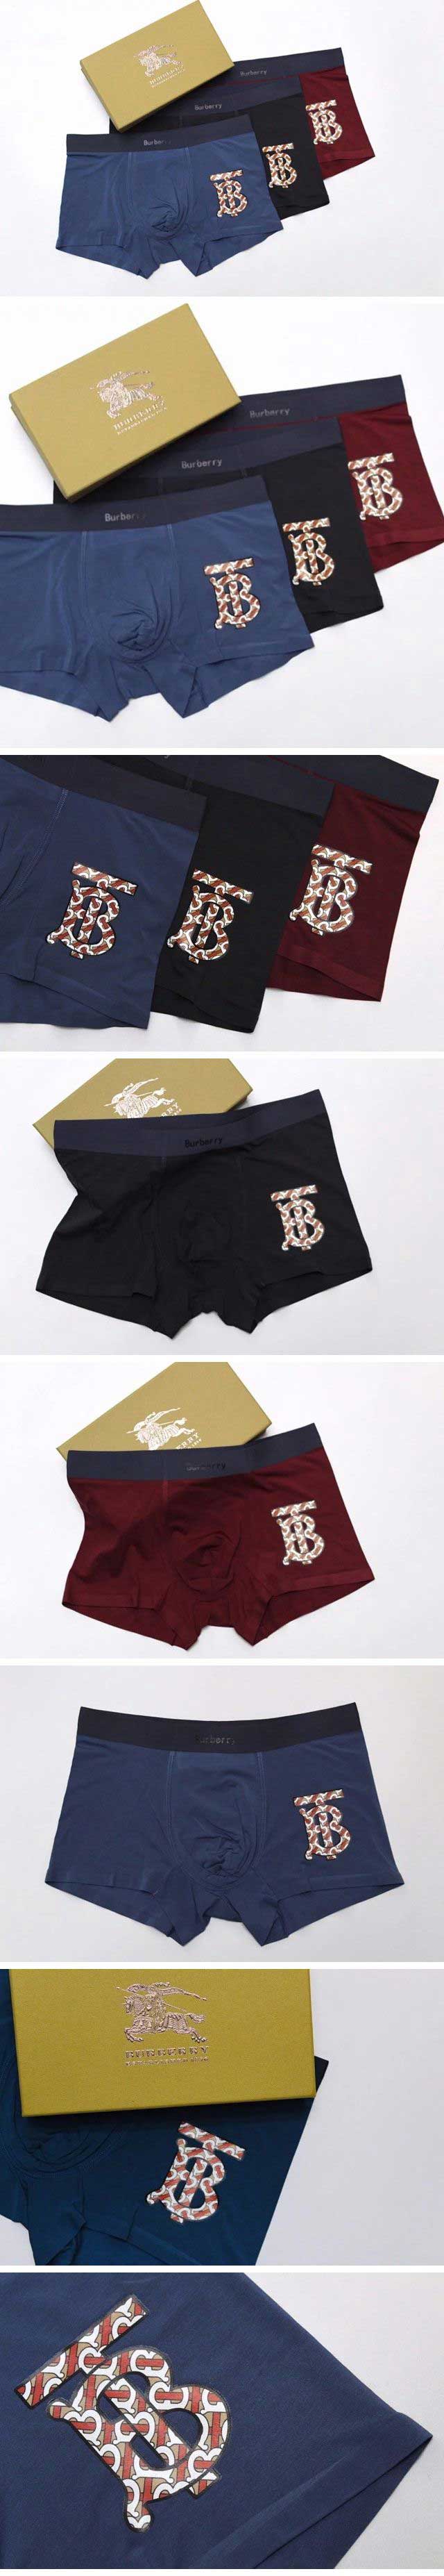 Burberry TB Logo Boxer Pants バーバリィー TB ロゴ ボクサー パンツ